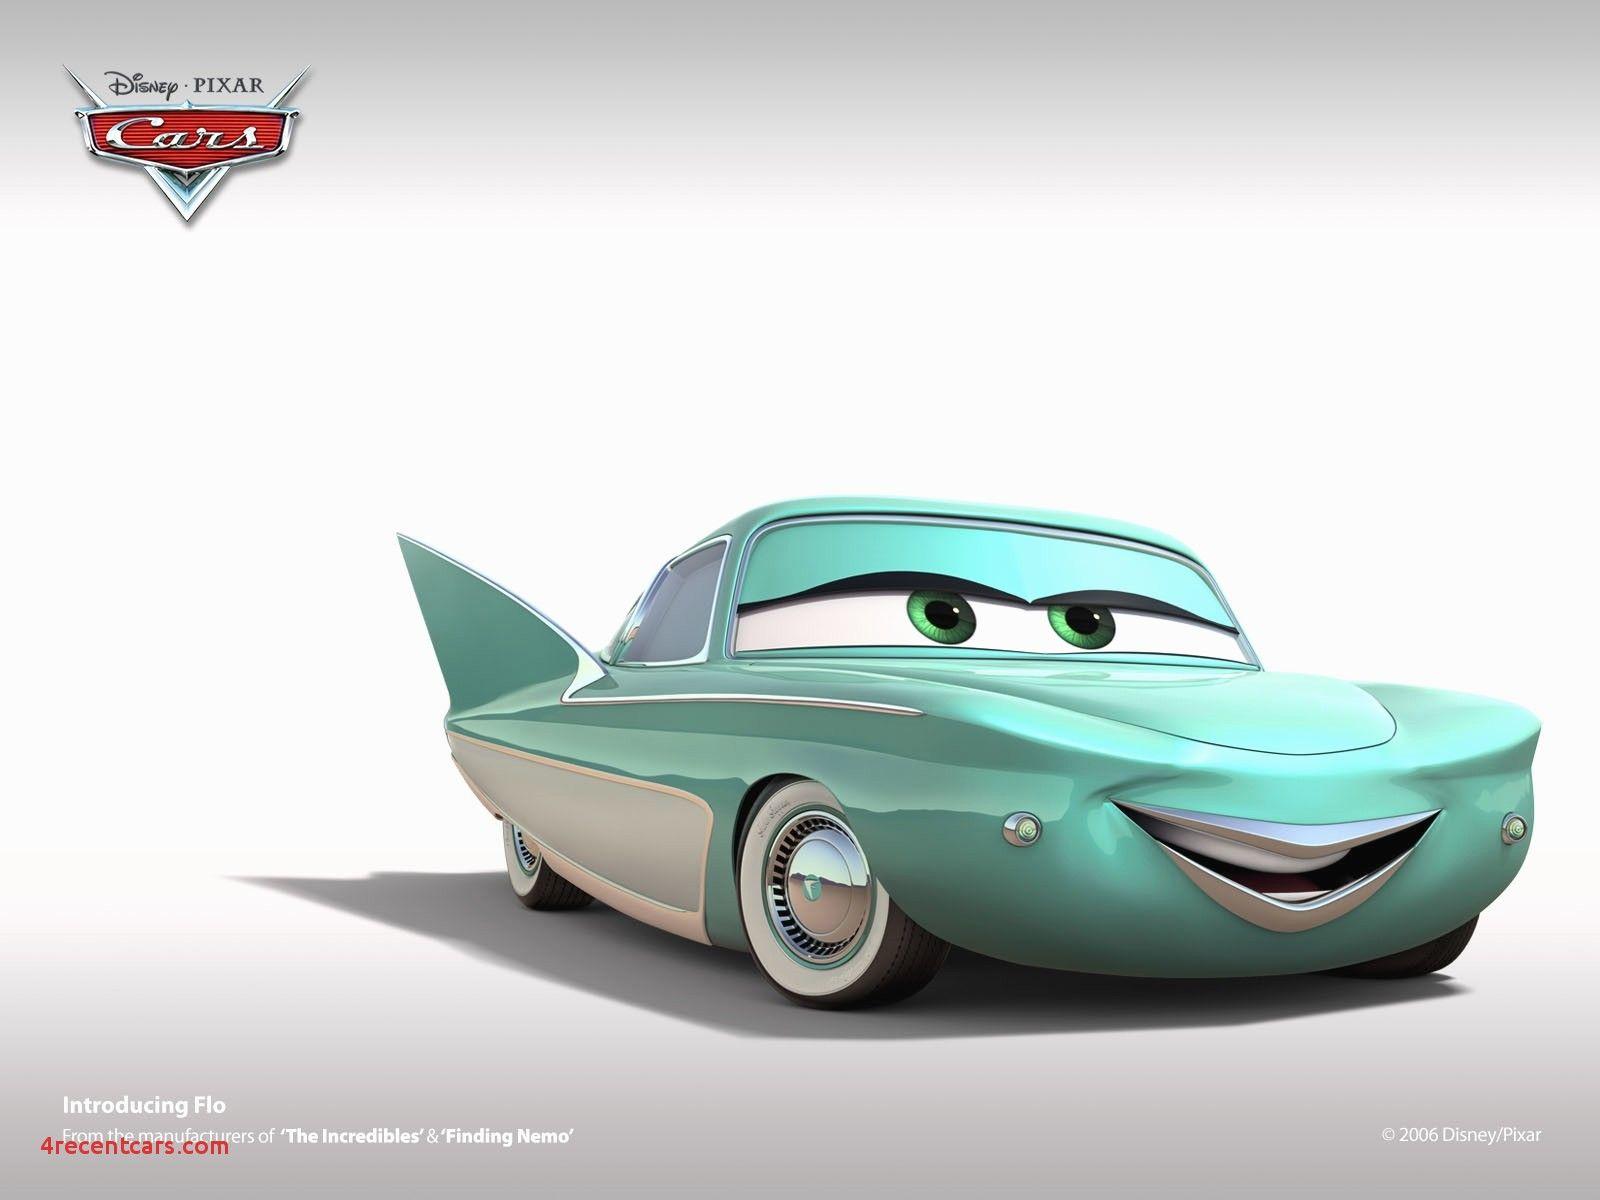 Disney Pixar Cars Wallpaper Awesome Flo Disney Pixar Cars 1 2 Free